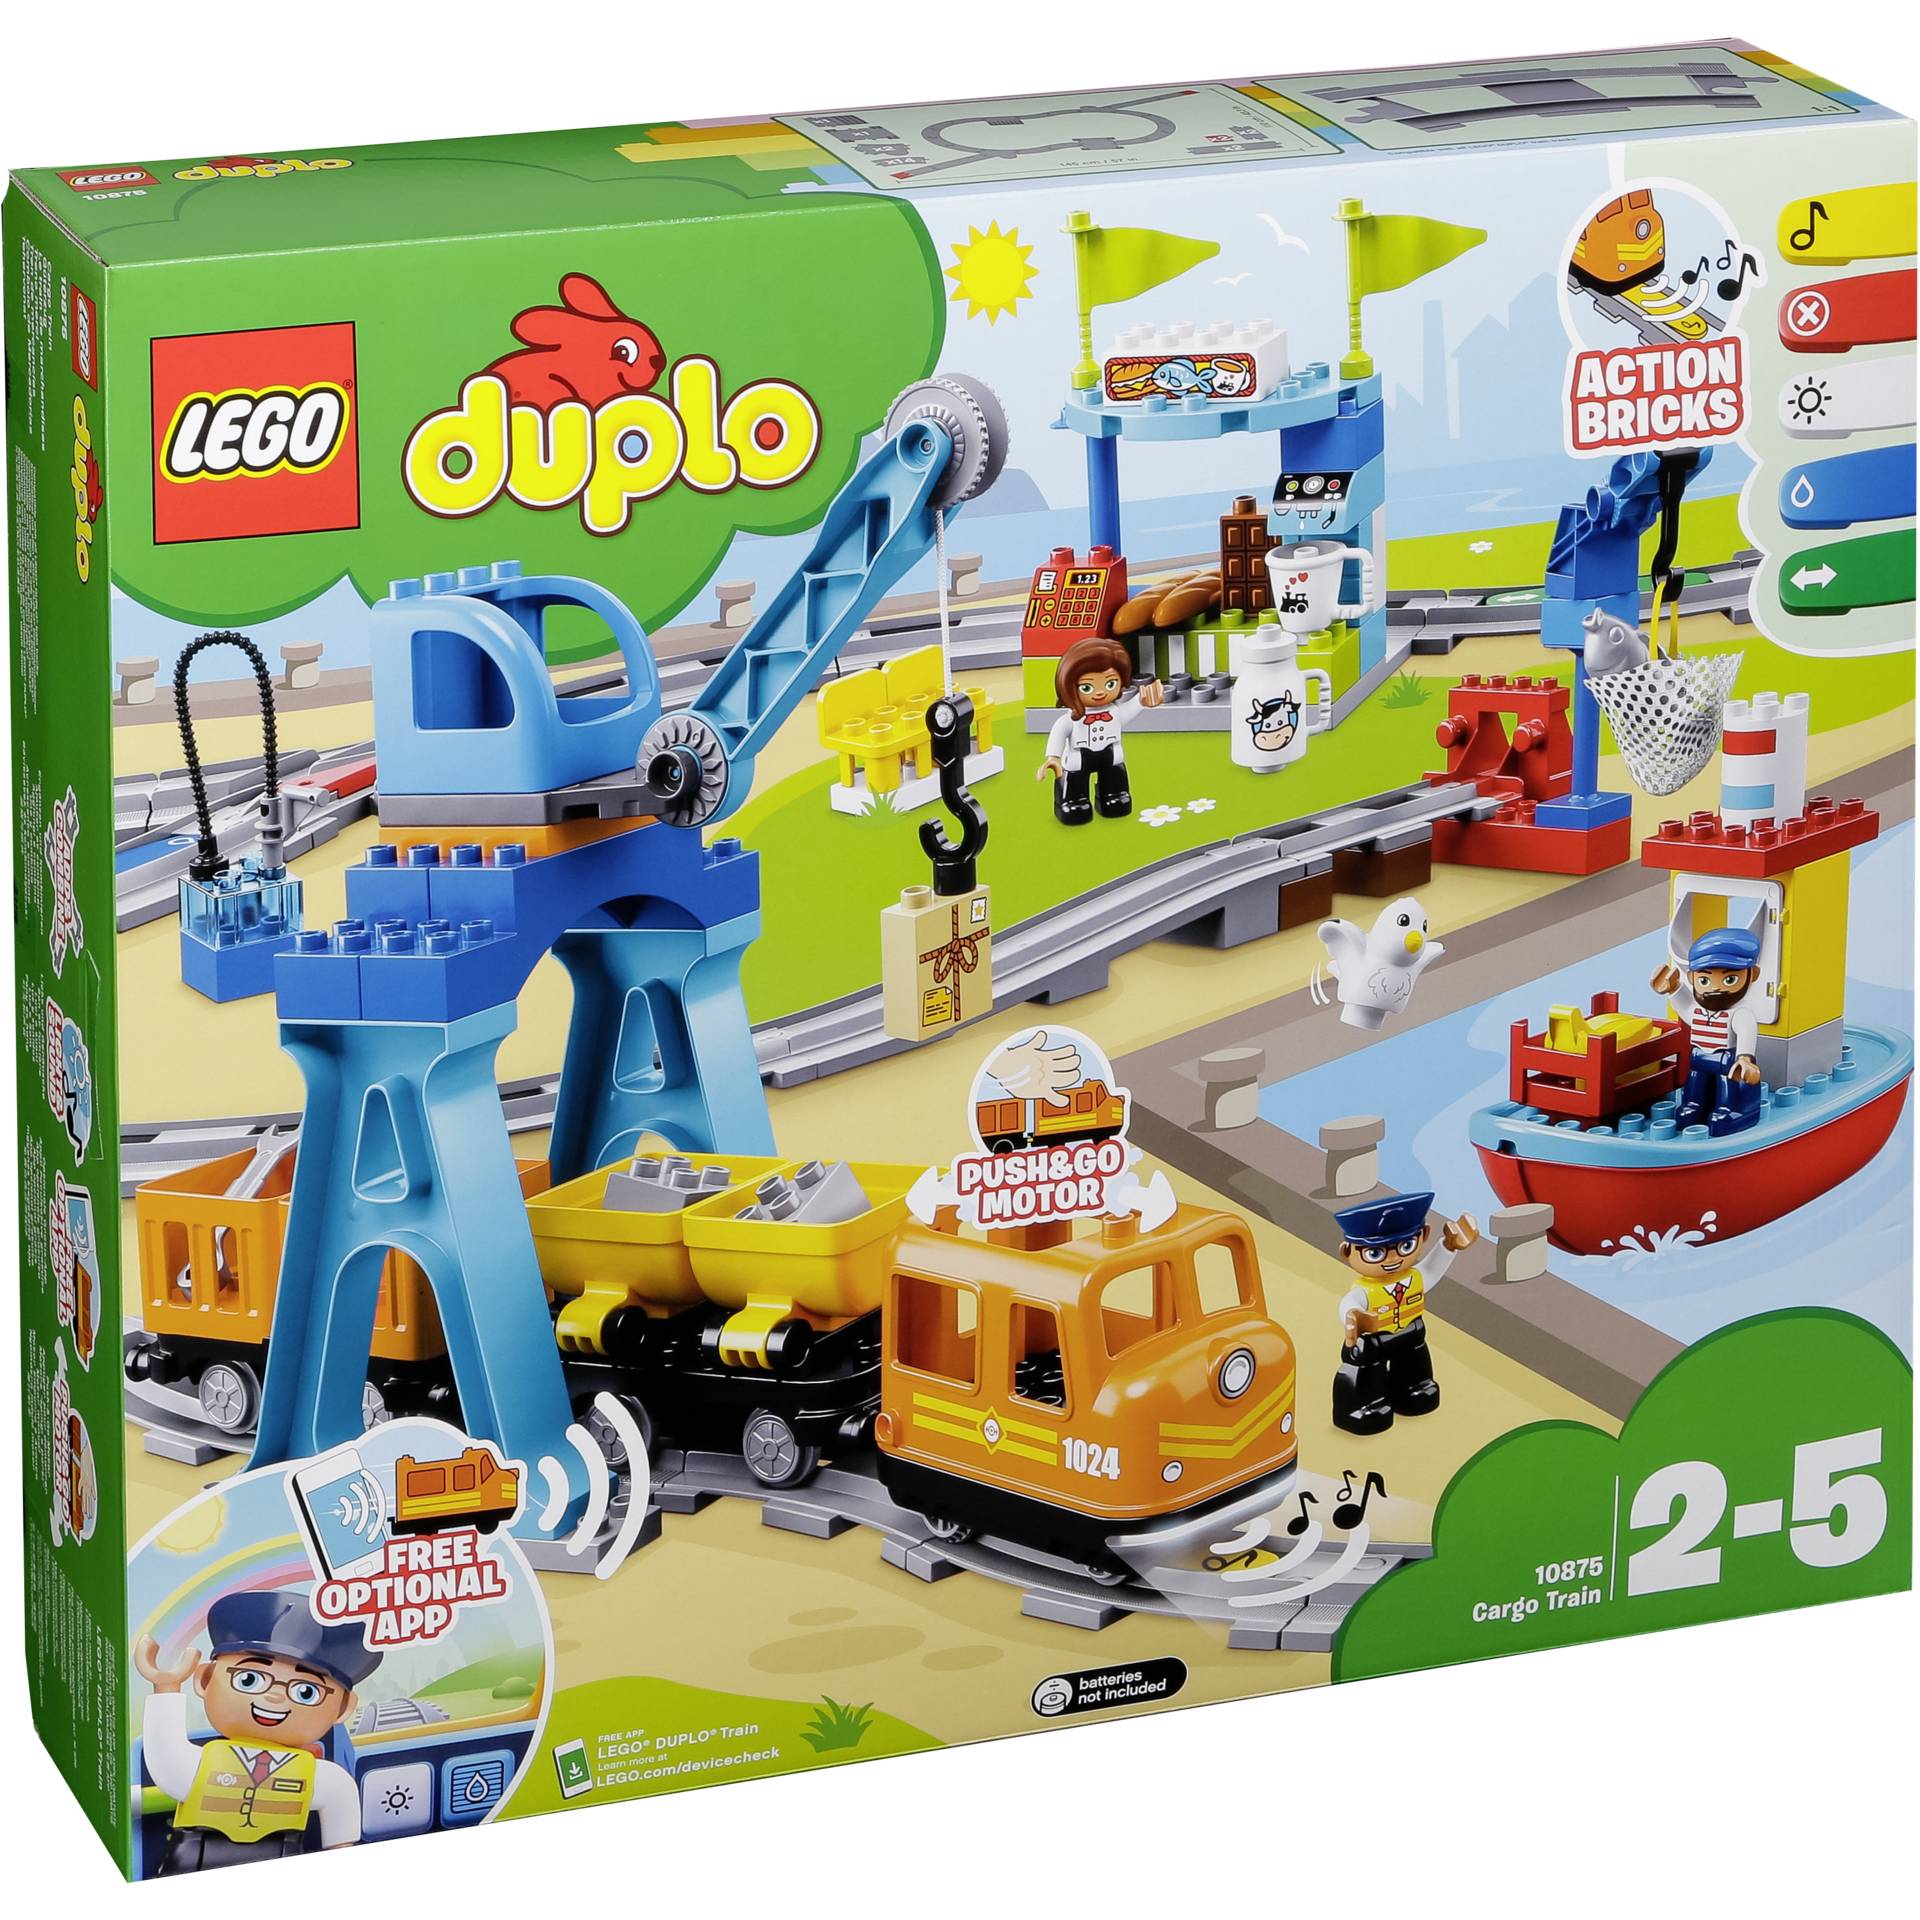 kilometer Skadelig Lyrical Lego -Konstruktionsspielzeug 10875 Duplo Güterzug -Lego Toys/Spielzeug  Grooves.land/Playthek